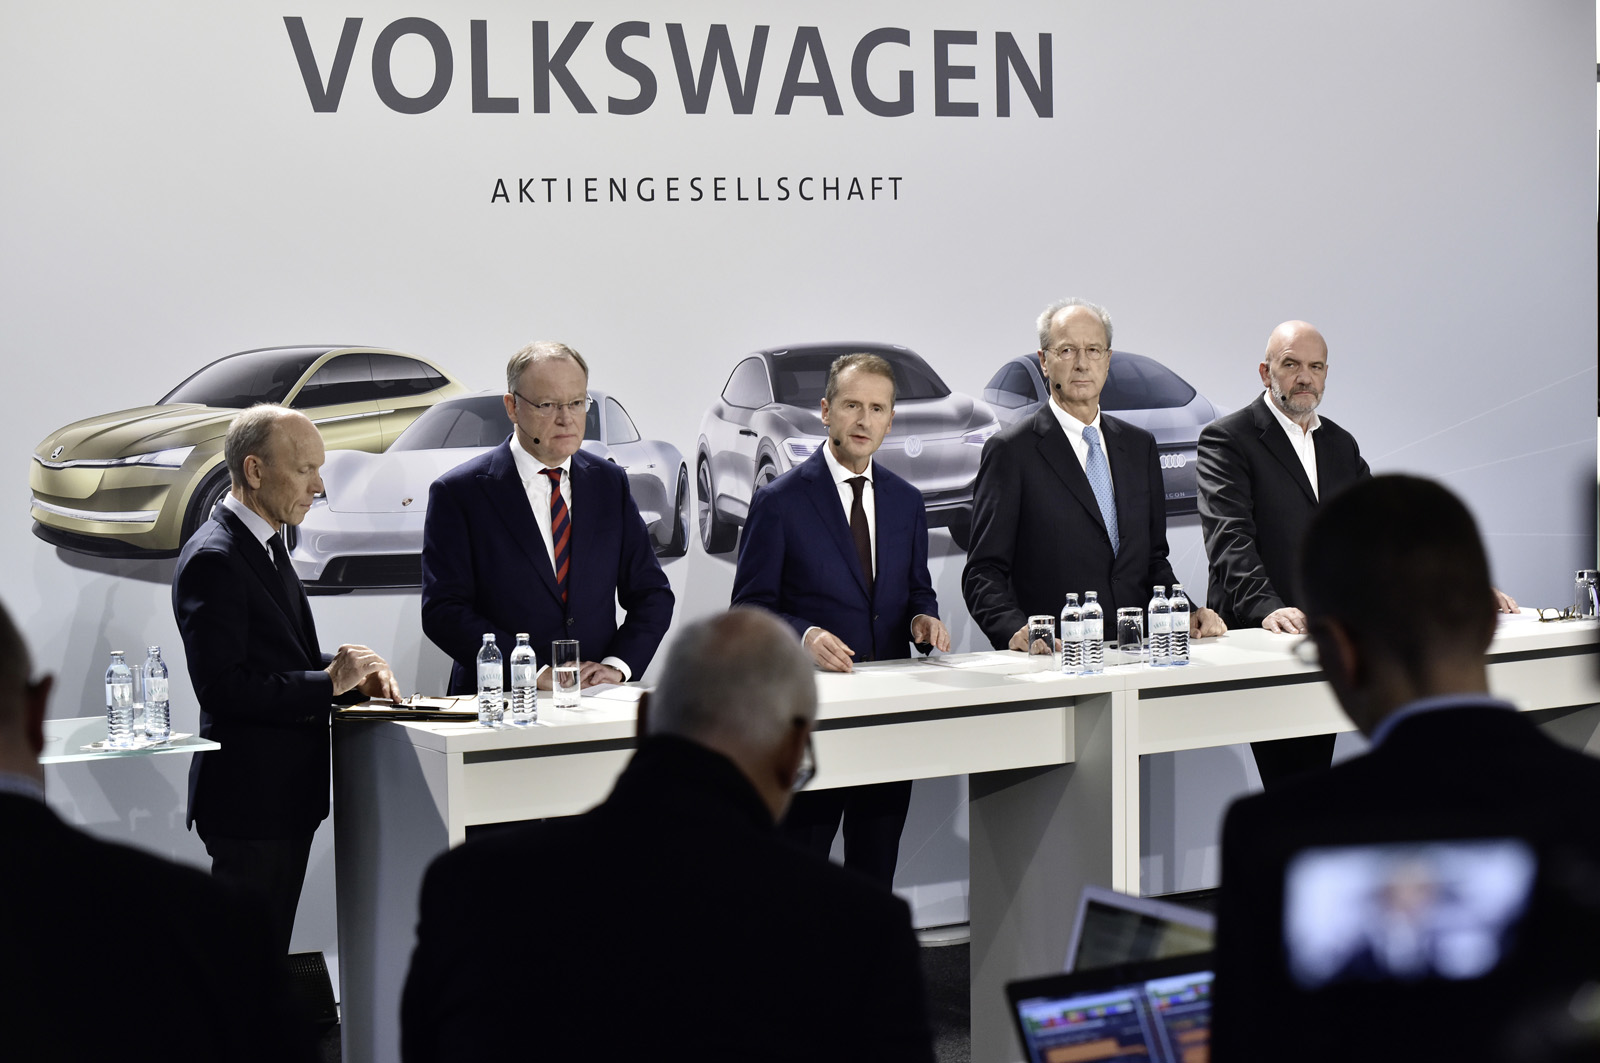 VW Group Επένδυση 44 δις ευρώ σε νέες μορφές